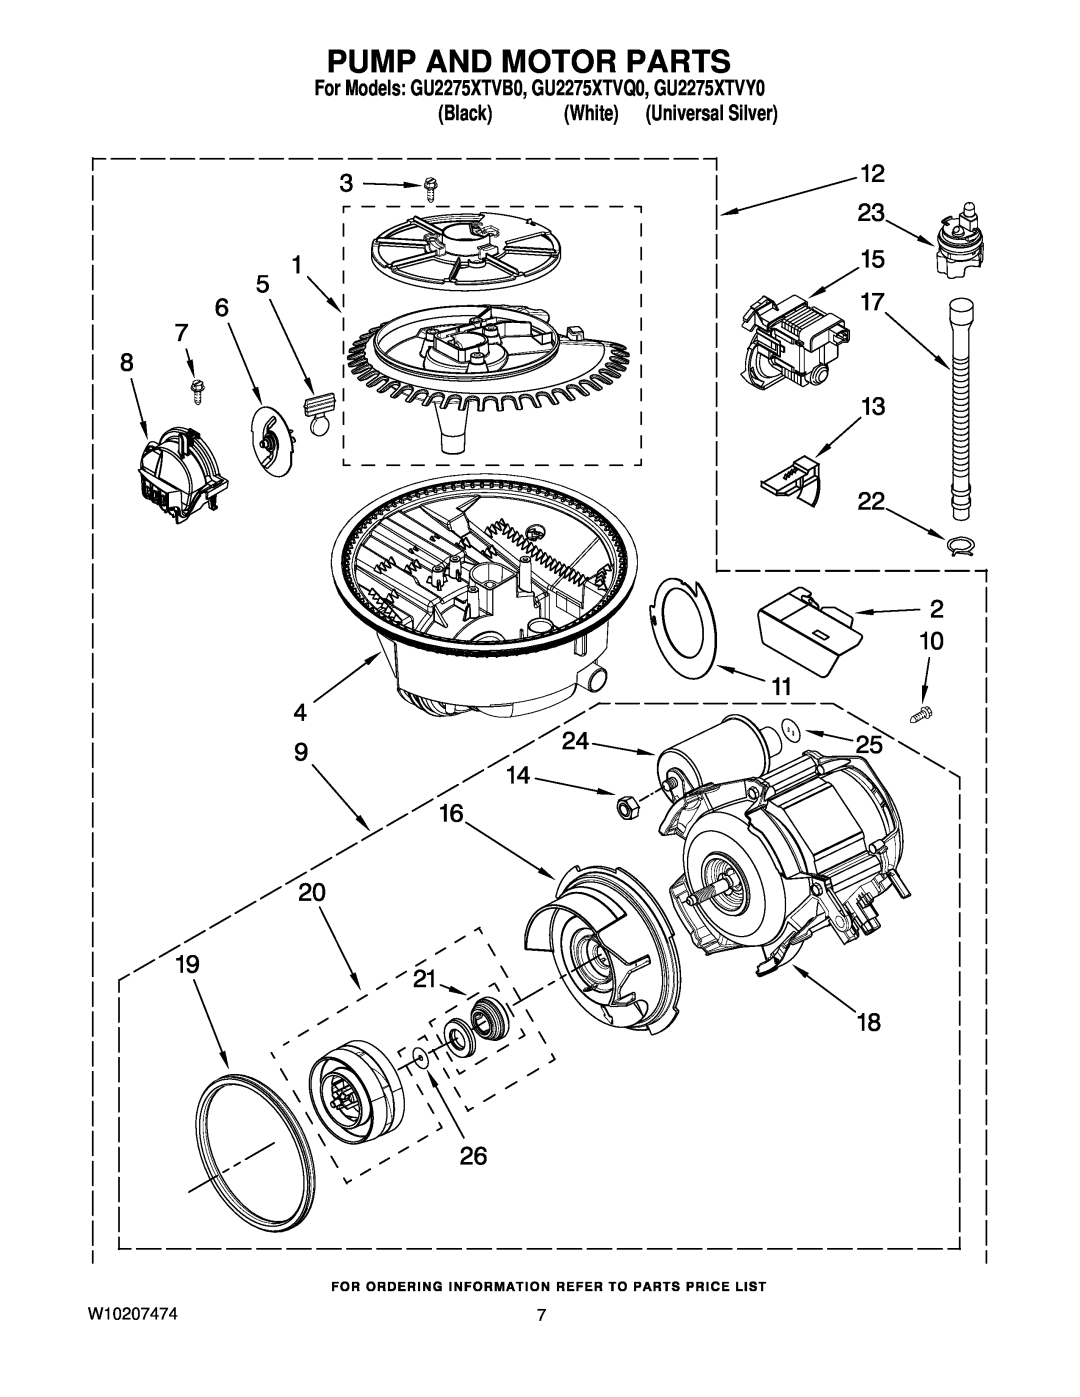 Whirlpool manual Pump And Motor Parts, Black, Universal Silver, For Models GU2275XTVB0, GU2275XTVQ0, GU2275XTVY0, White 